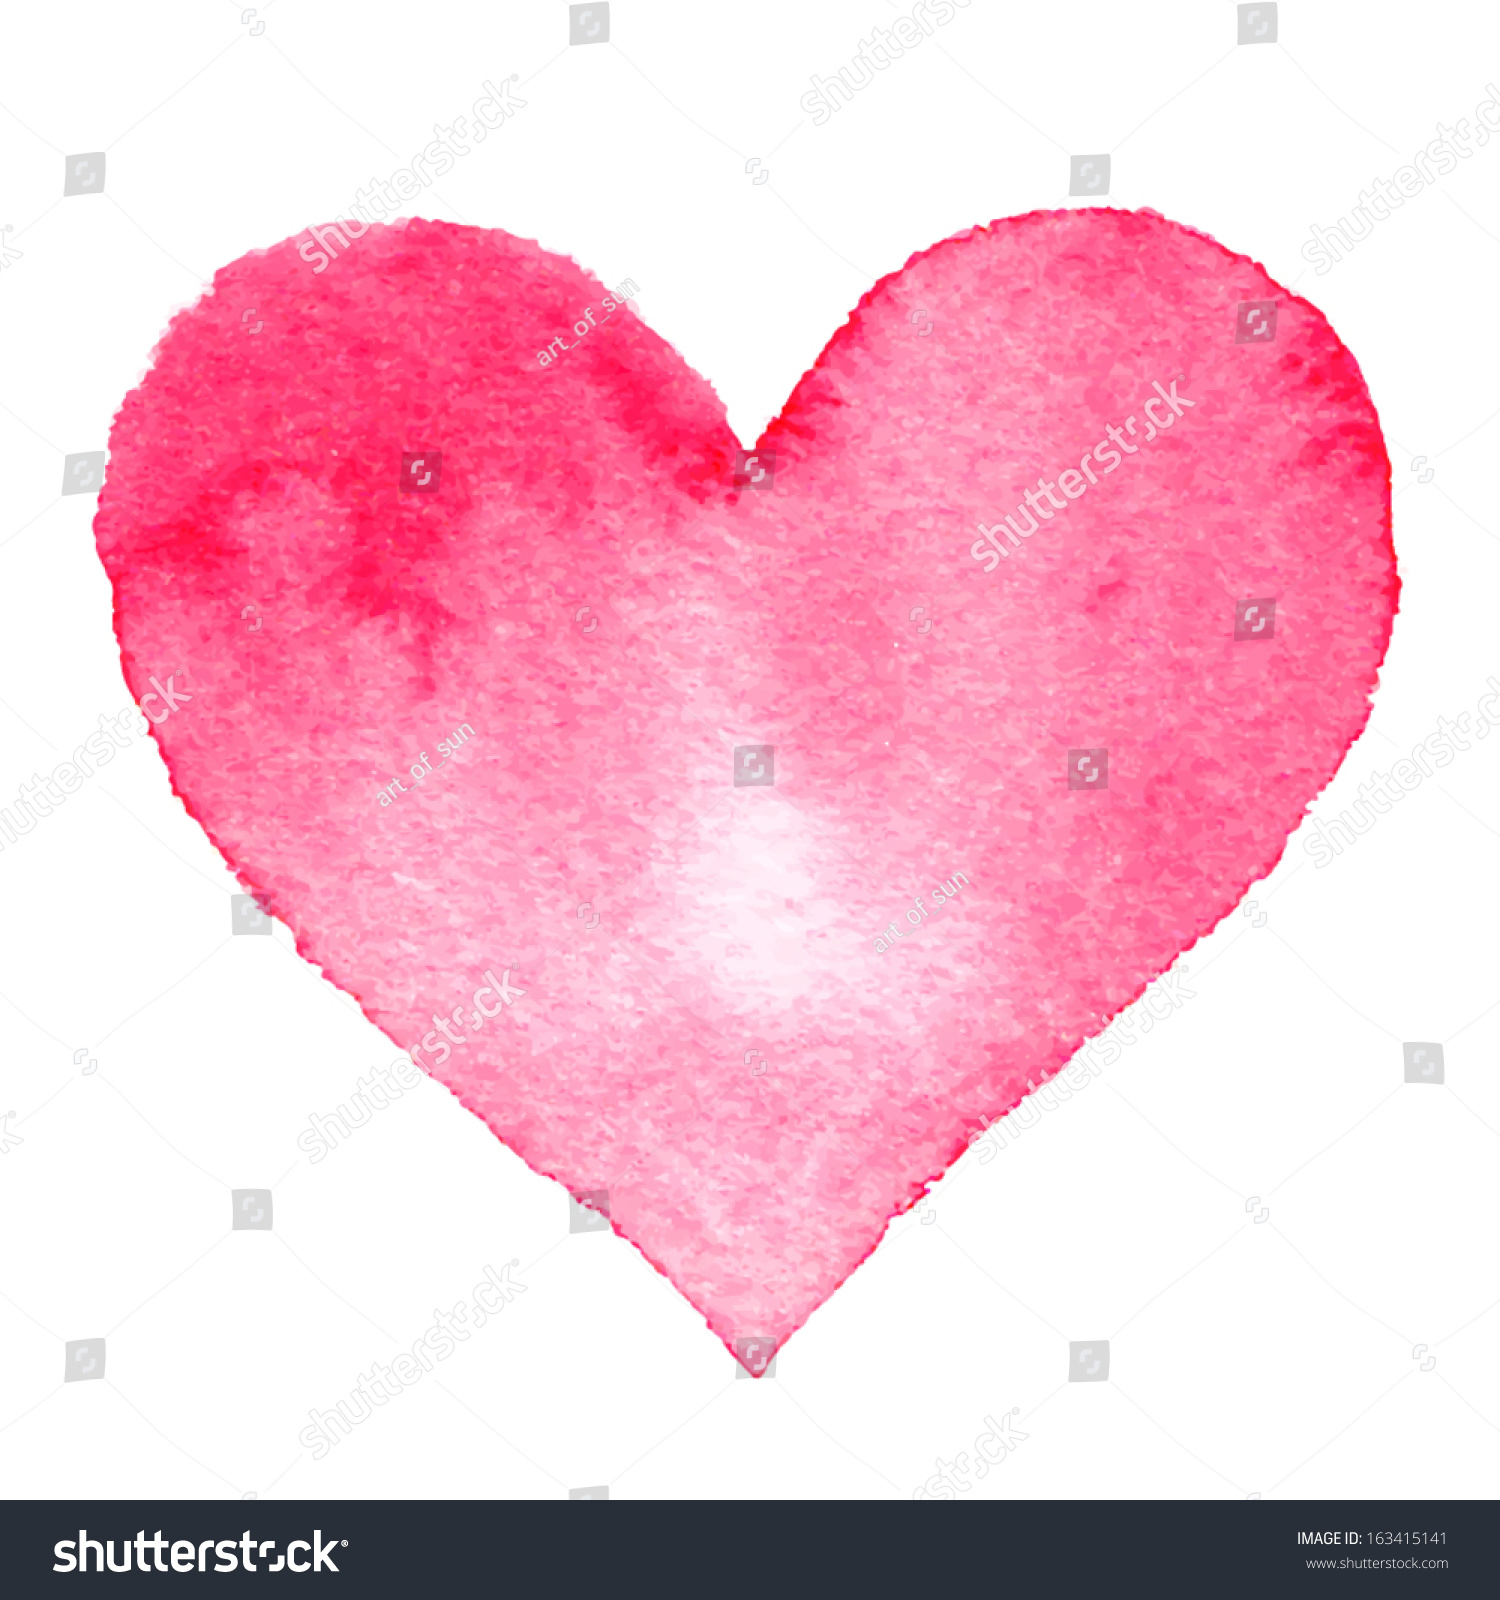 Download Watercolor Painted Pink Heart Vector Element Stock Vector ...